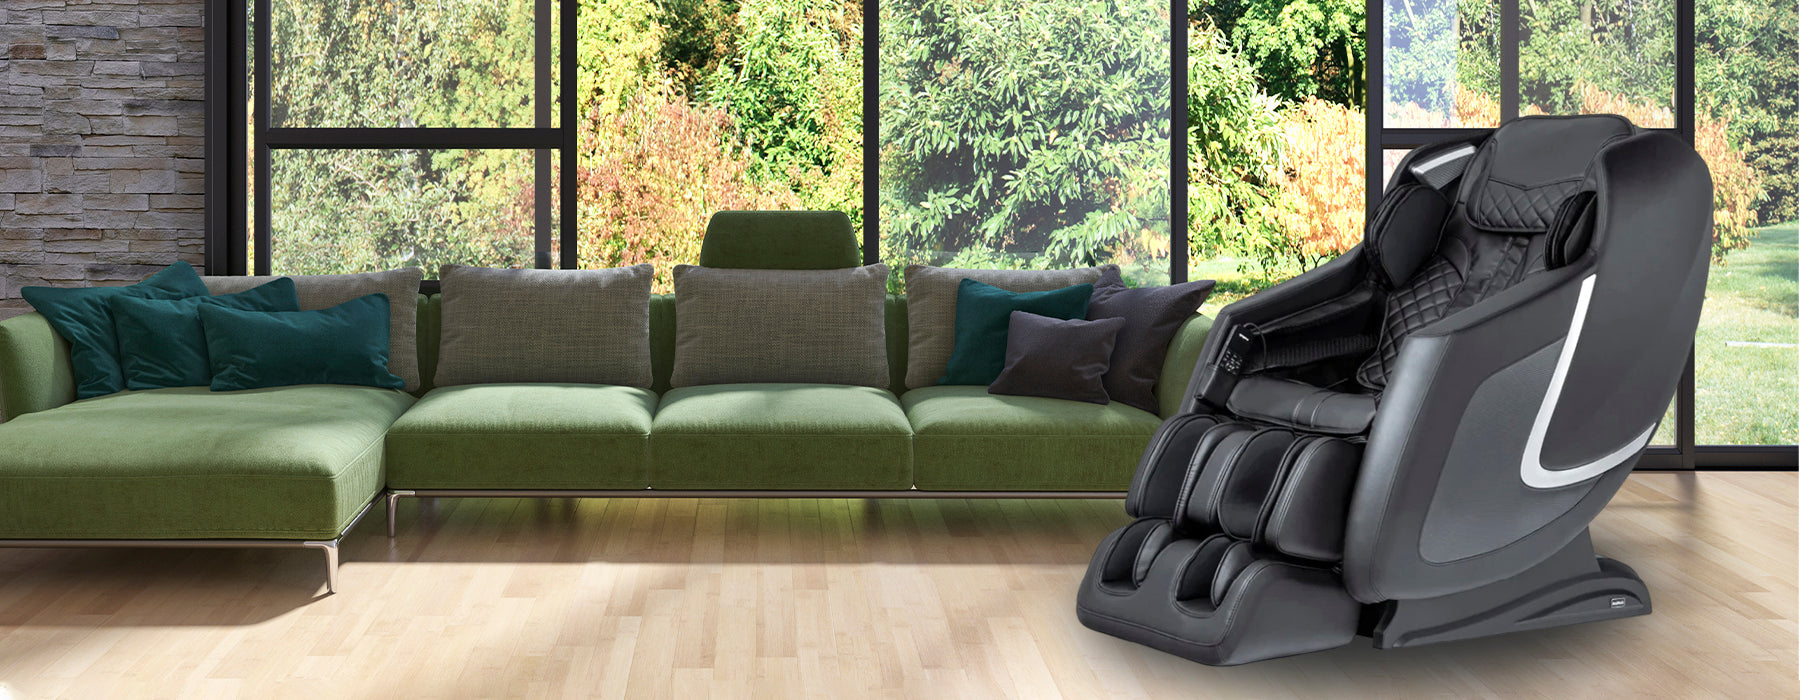 AmaMedic 3D Premium Massage Chair LIFESTYLE IMAGE